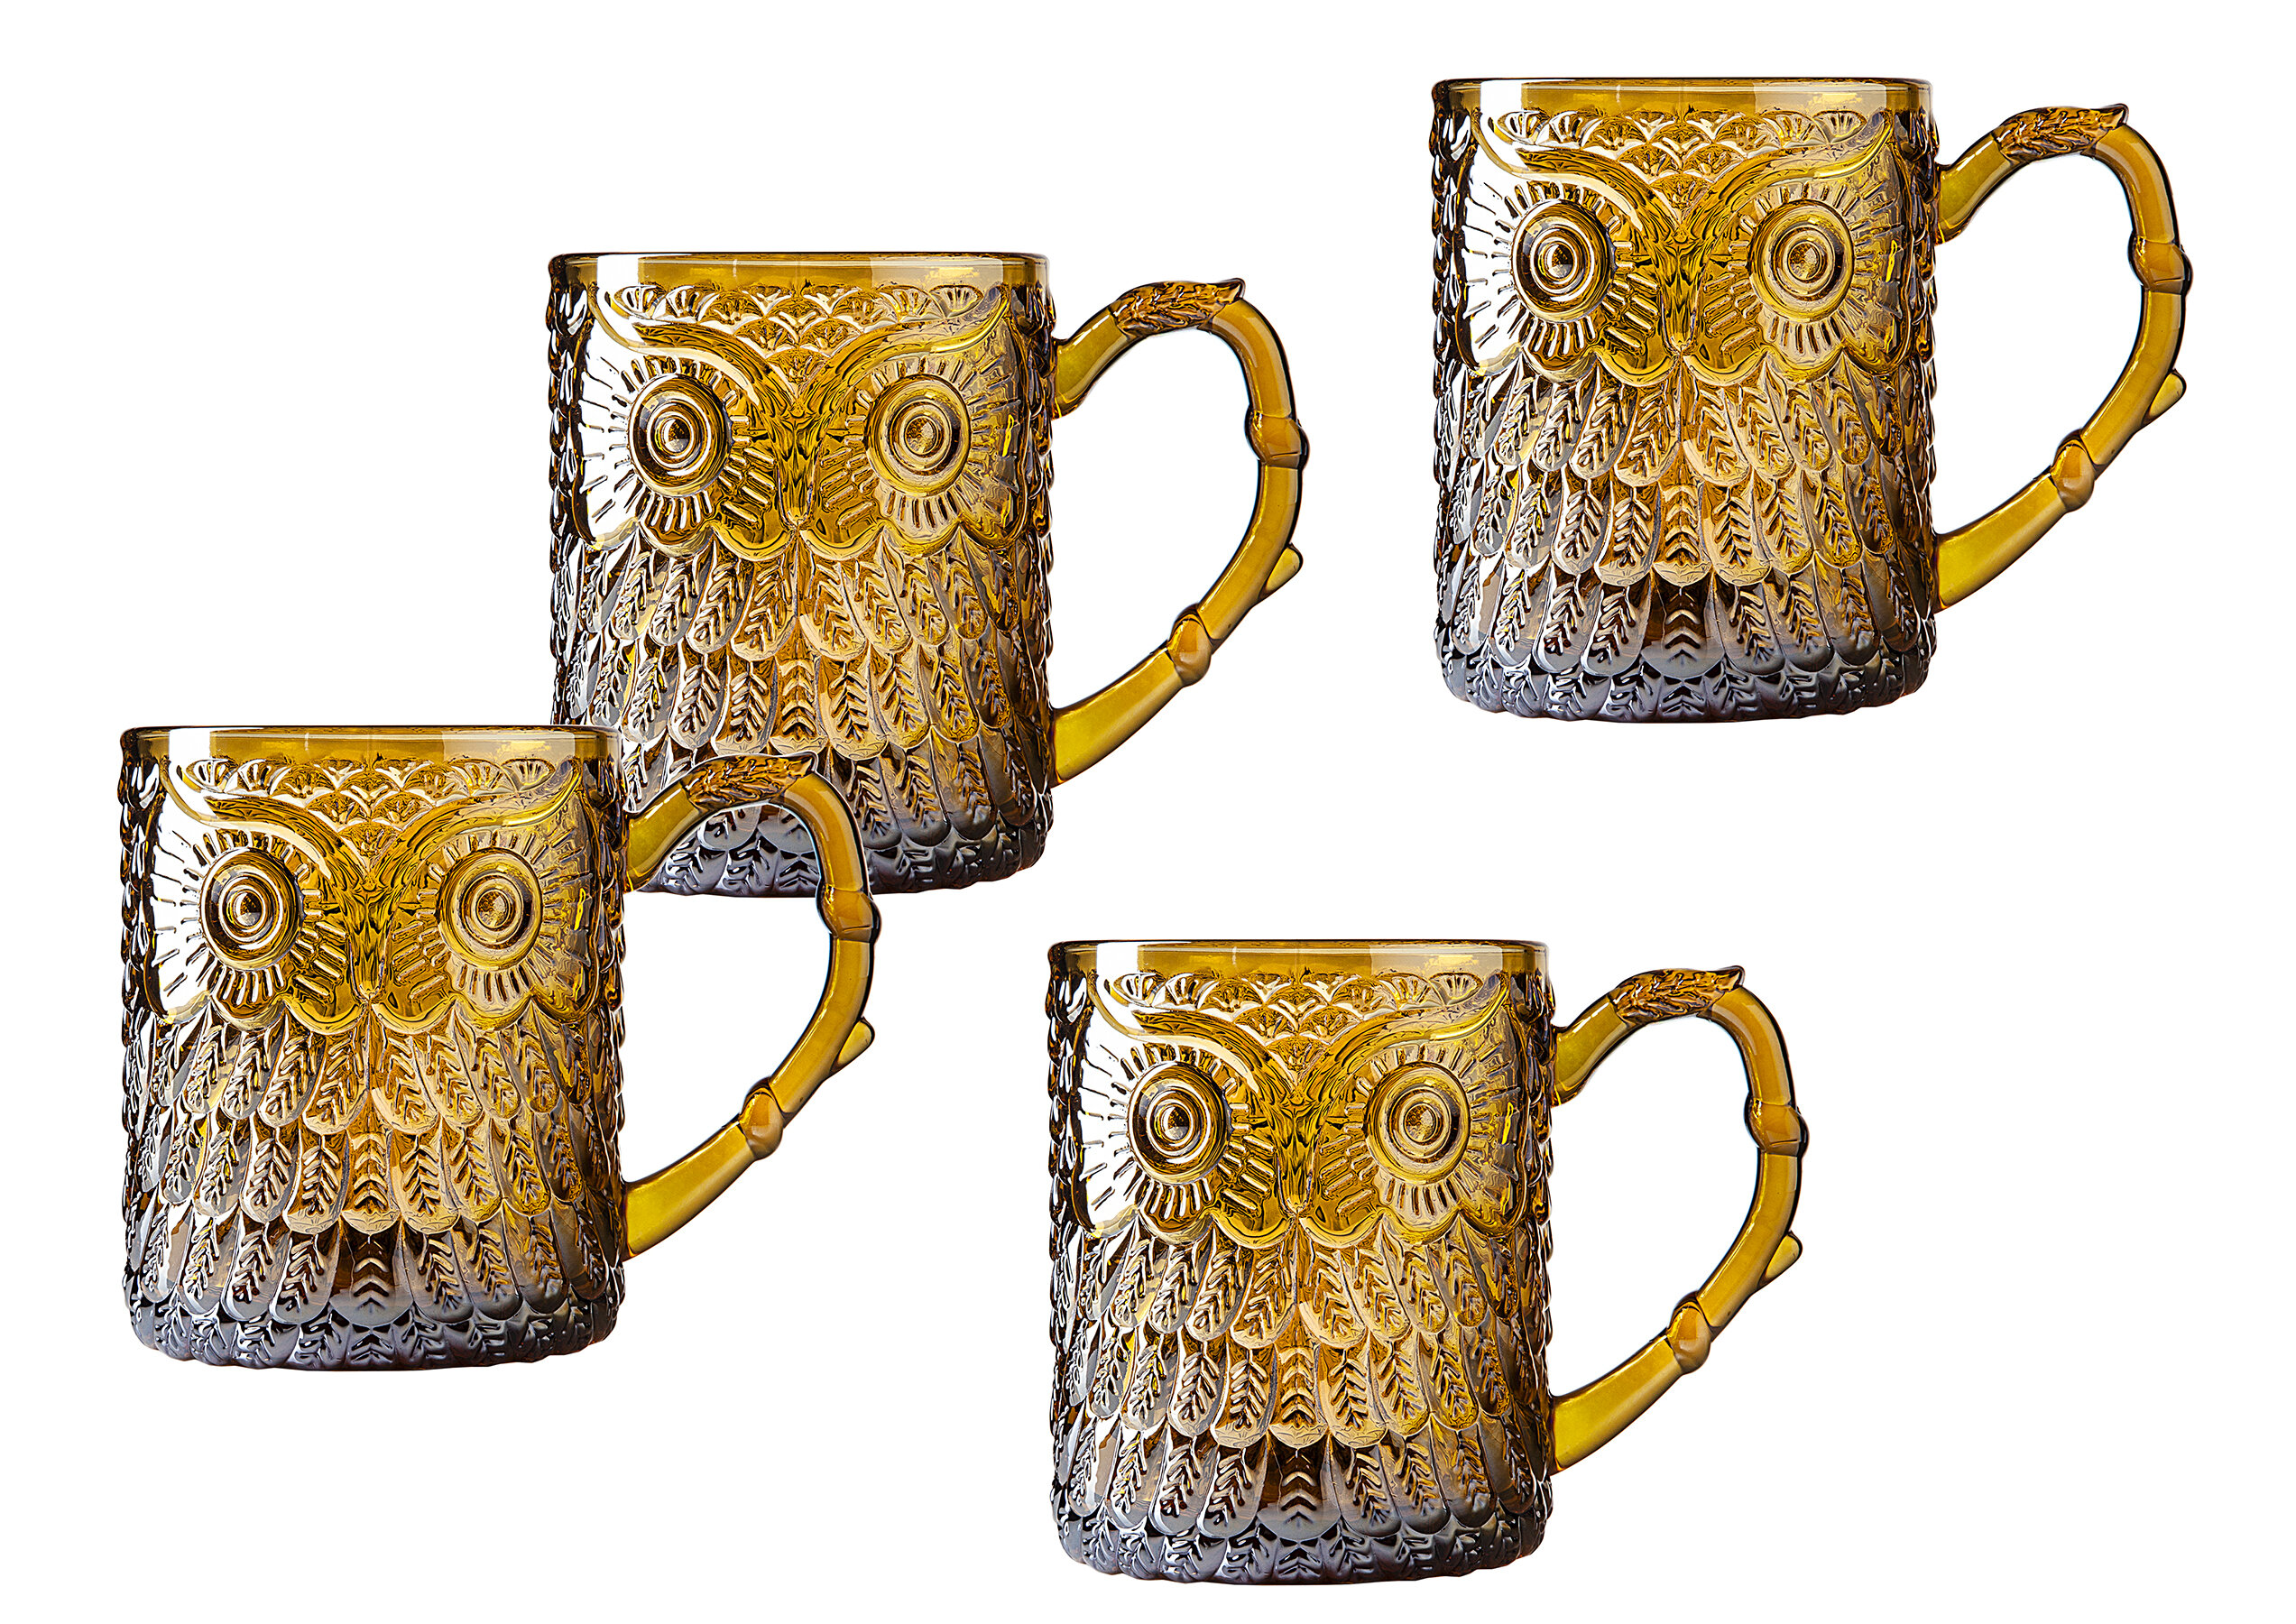 Godinger Coffee Mugs, Glass Coffee Mug Cups Set - Dublin Collection, Set of  4